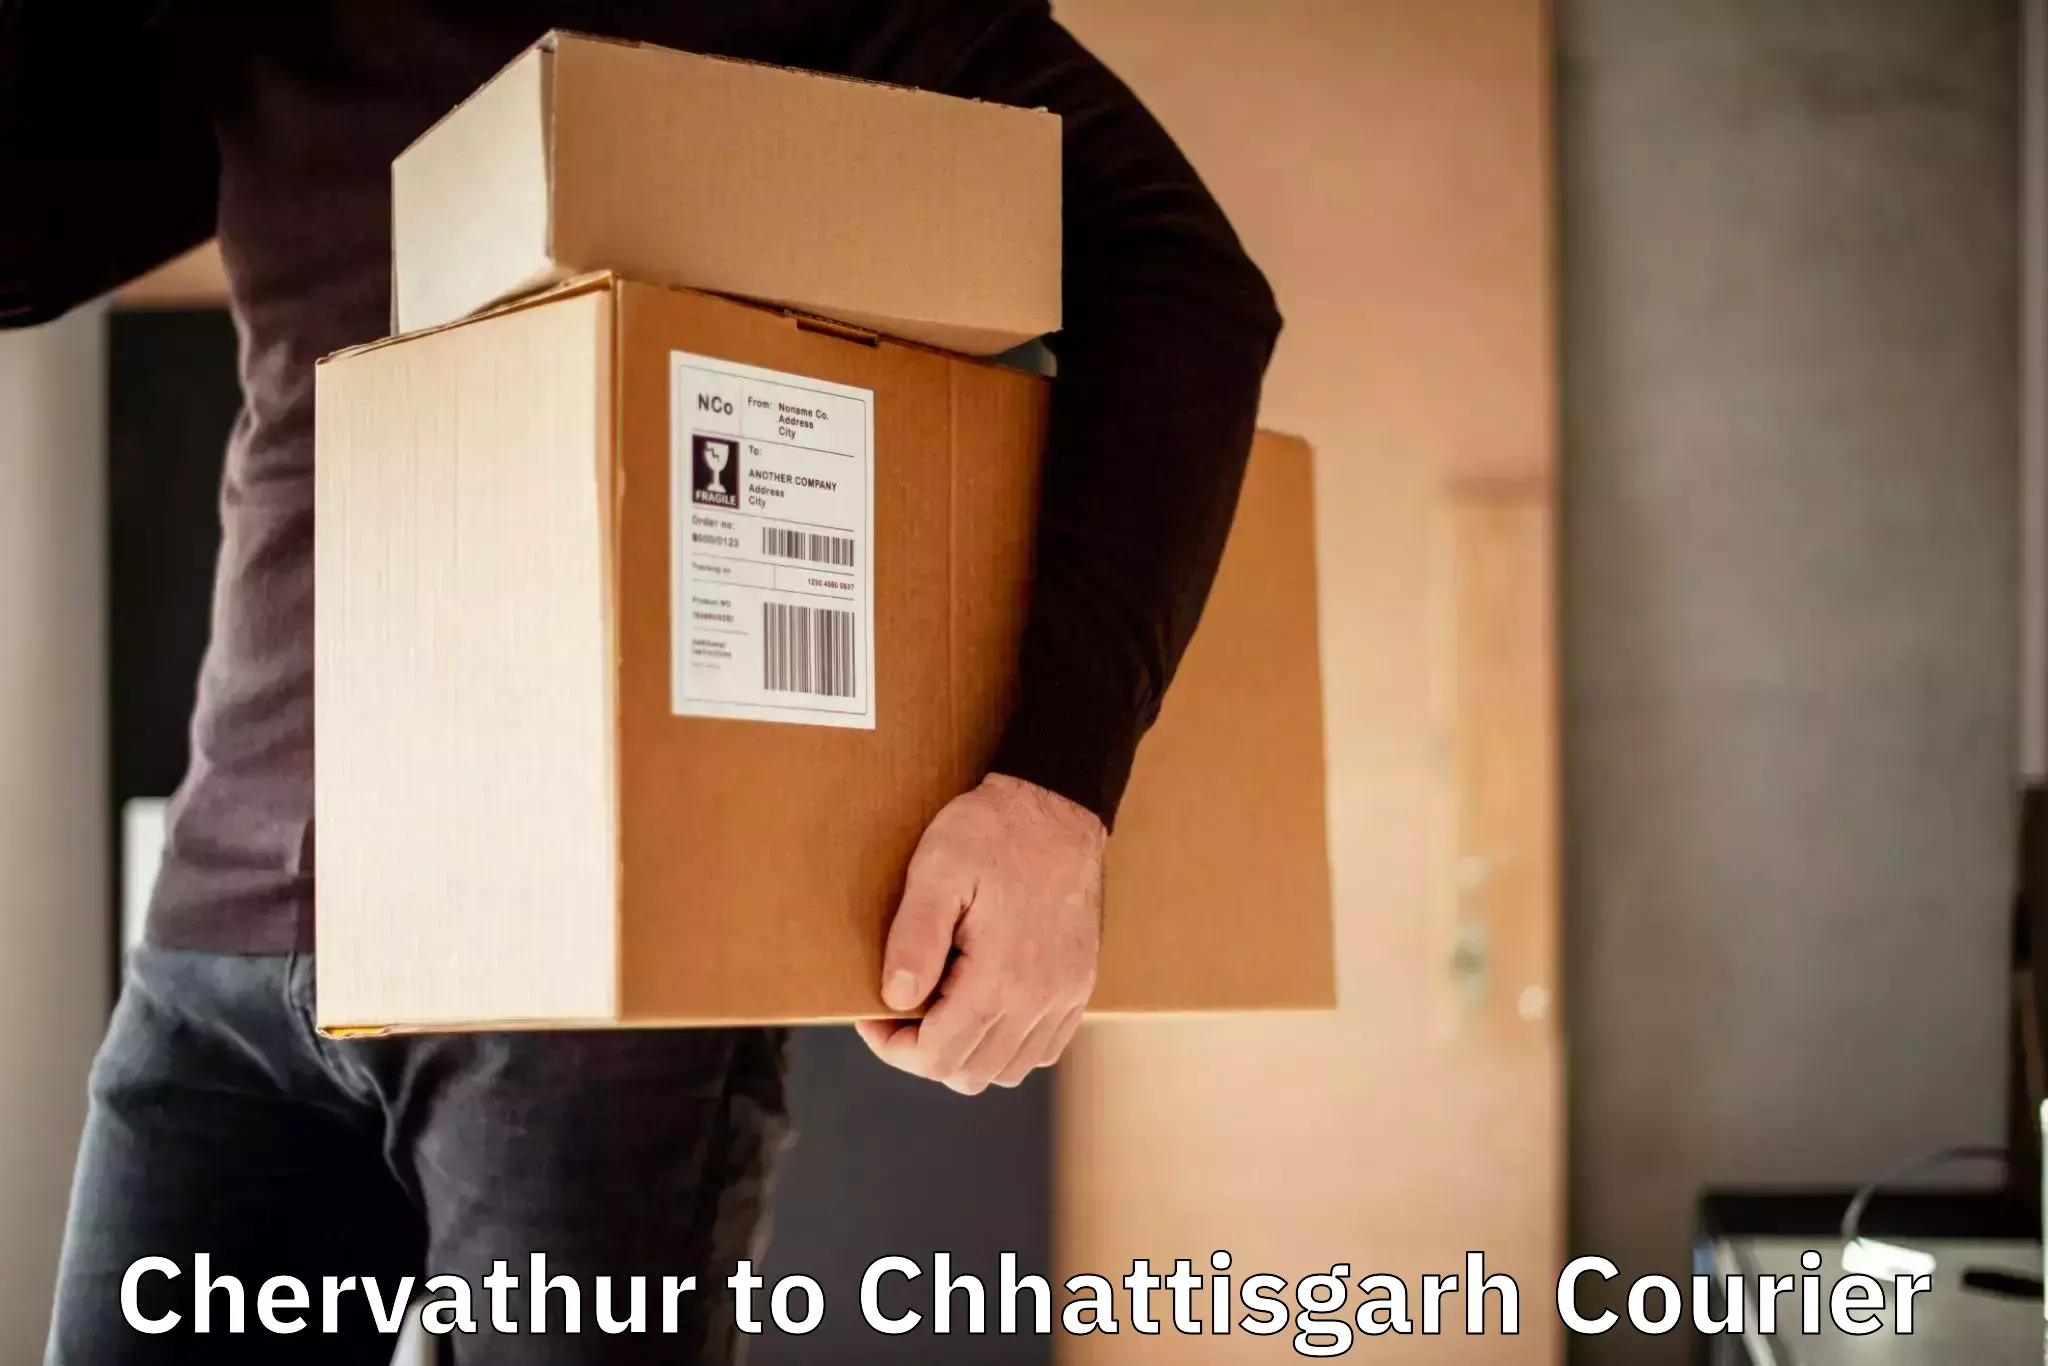 High-speed parcel service Chervathur to Premnagar